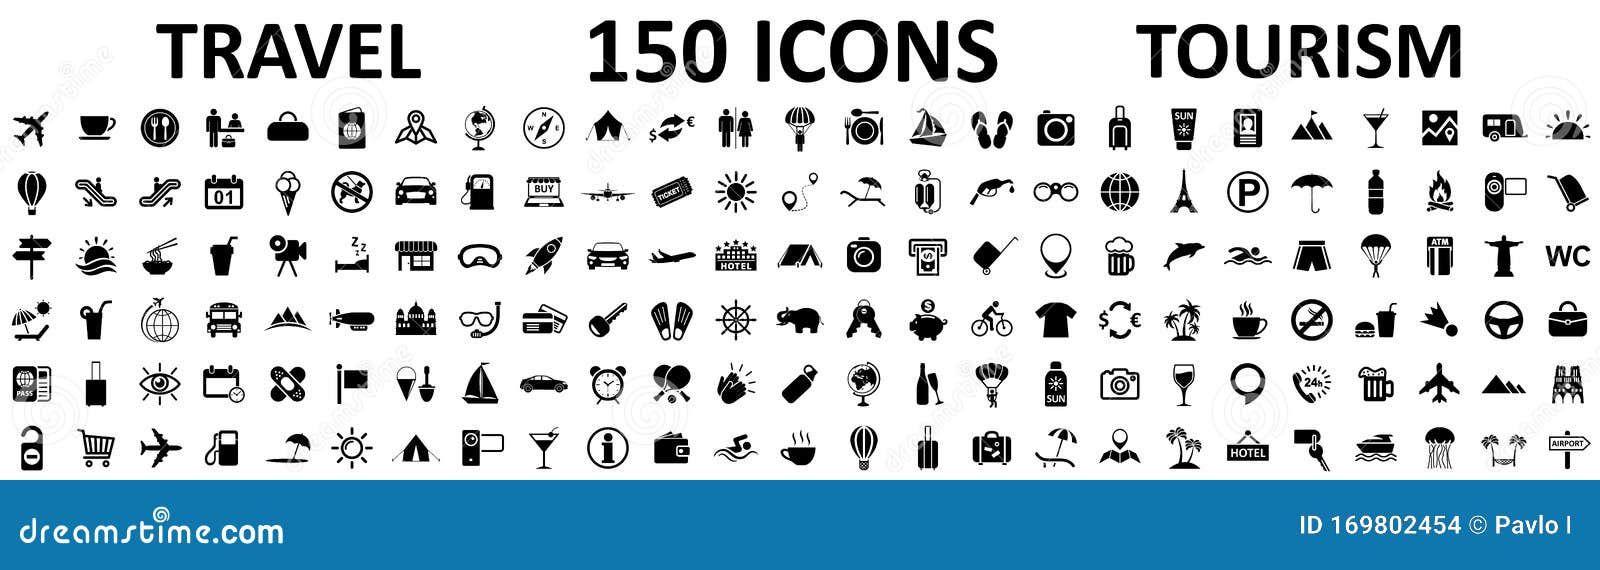 travel and tourism set 150 icons, vocation signs for web development apps, websites, infographics,  s Ã¢â¬â 